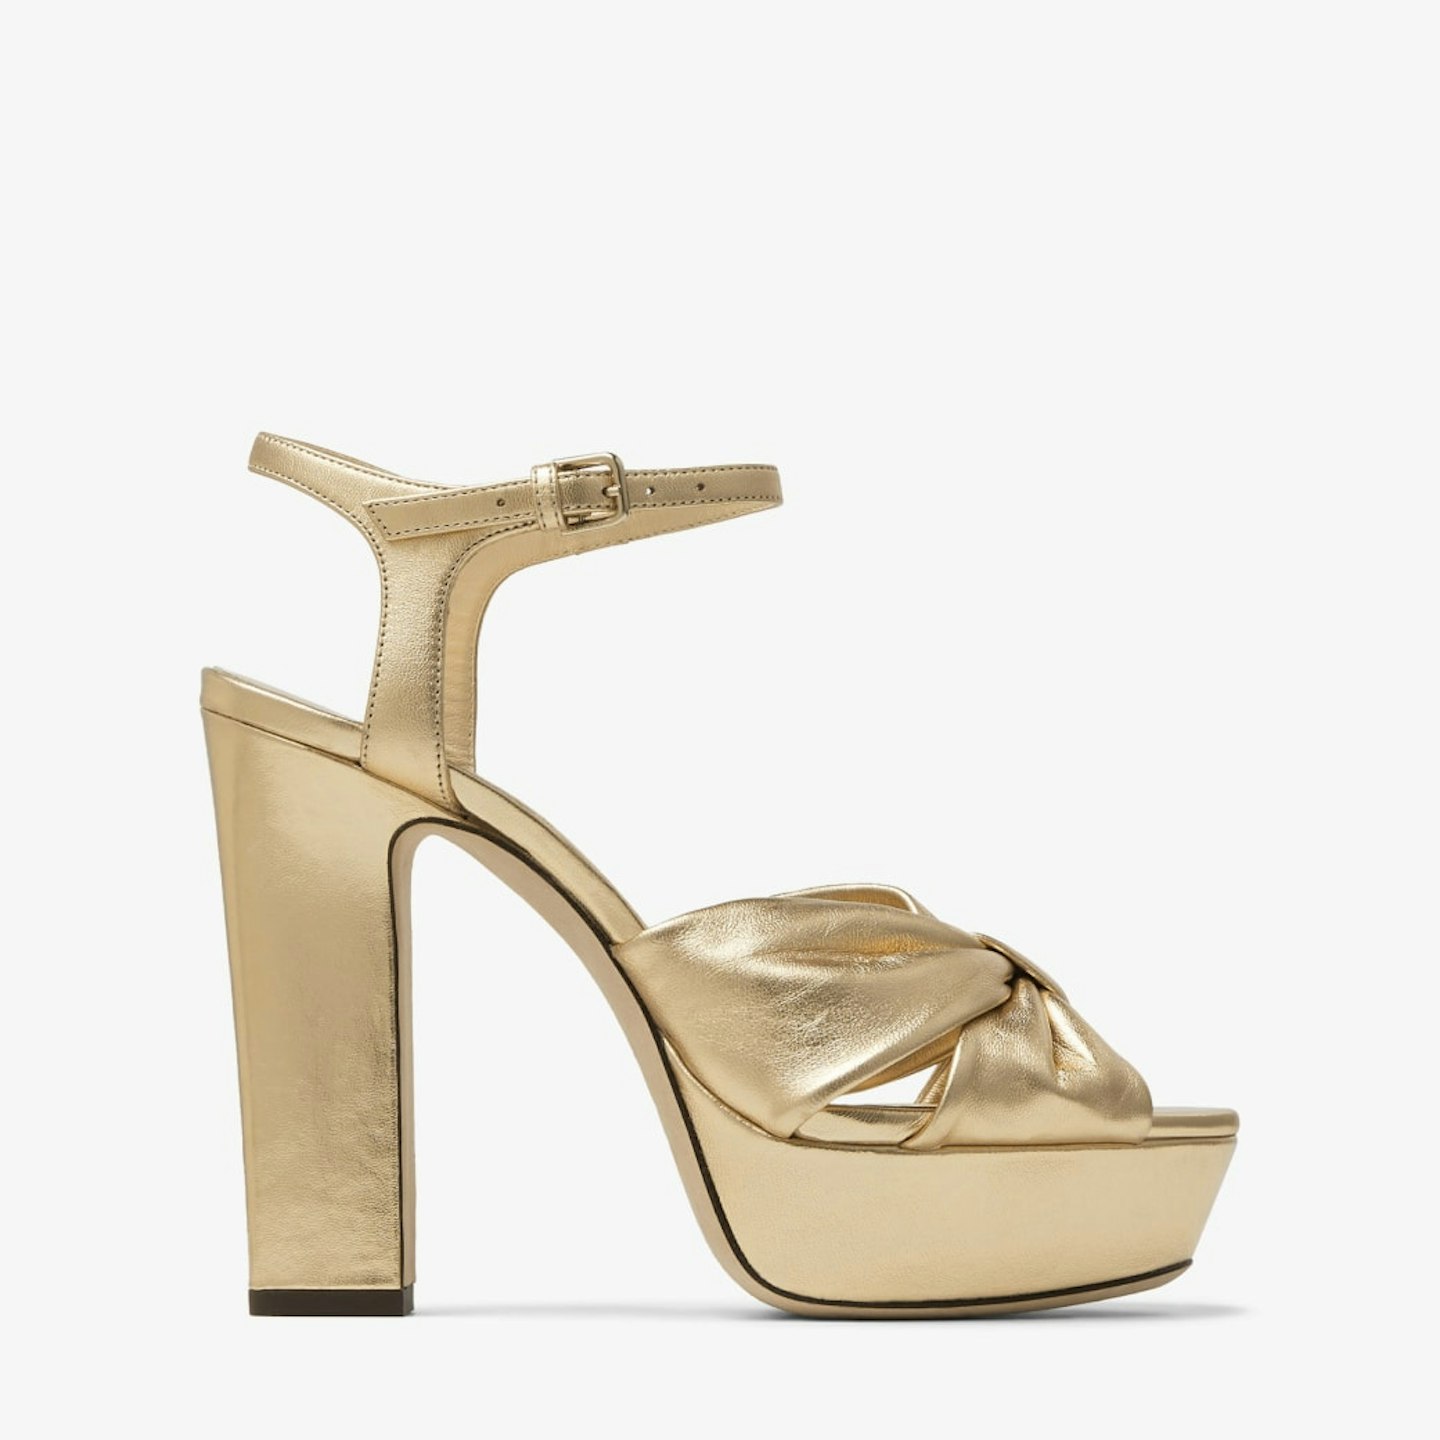 https://www.jimmychoo.com/en/women/shoes/platforms/heloise-120/gold-metallic-nappa-leather-platform-sandals-HELOISE120MNAOO0022.html?cgid=women-shoes-platforms